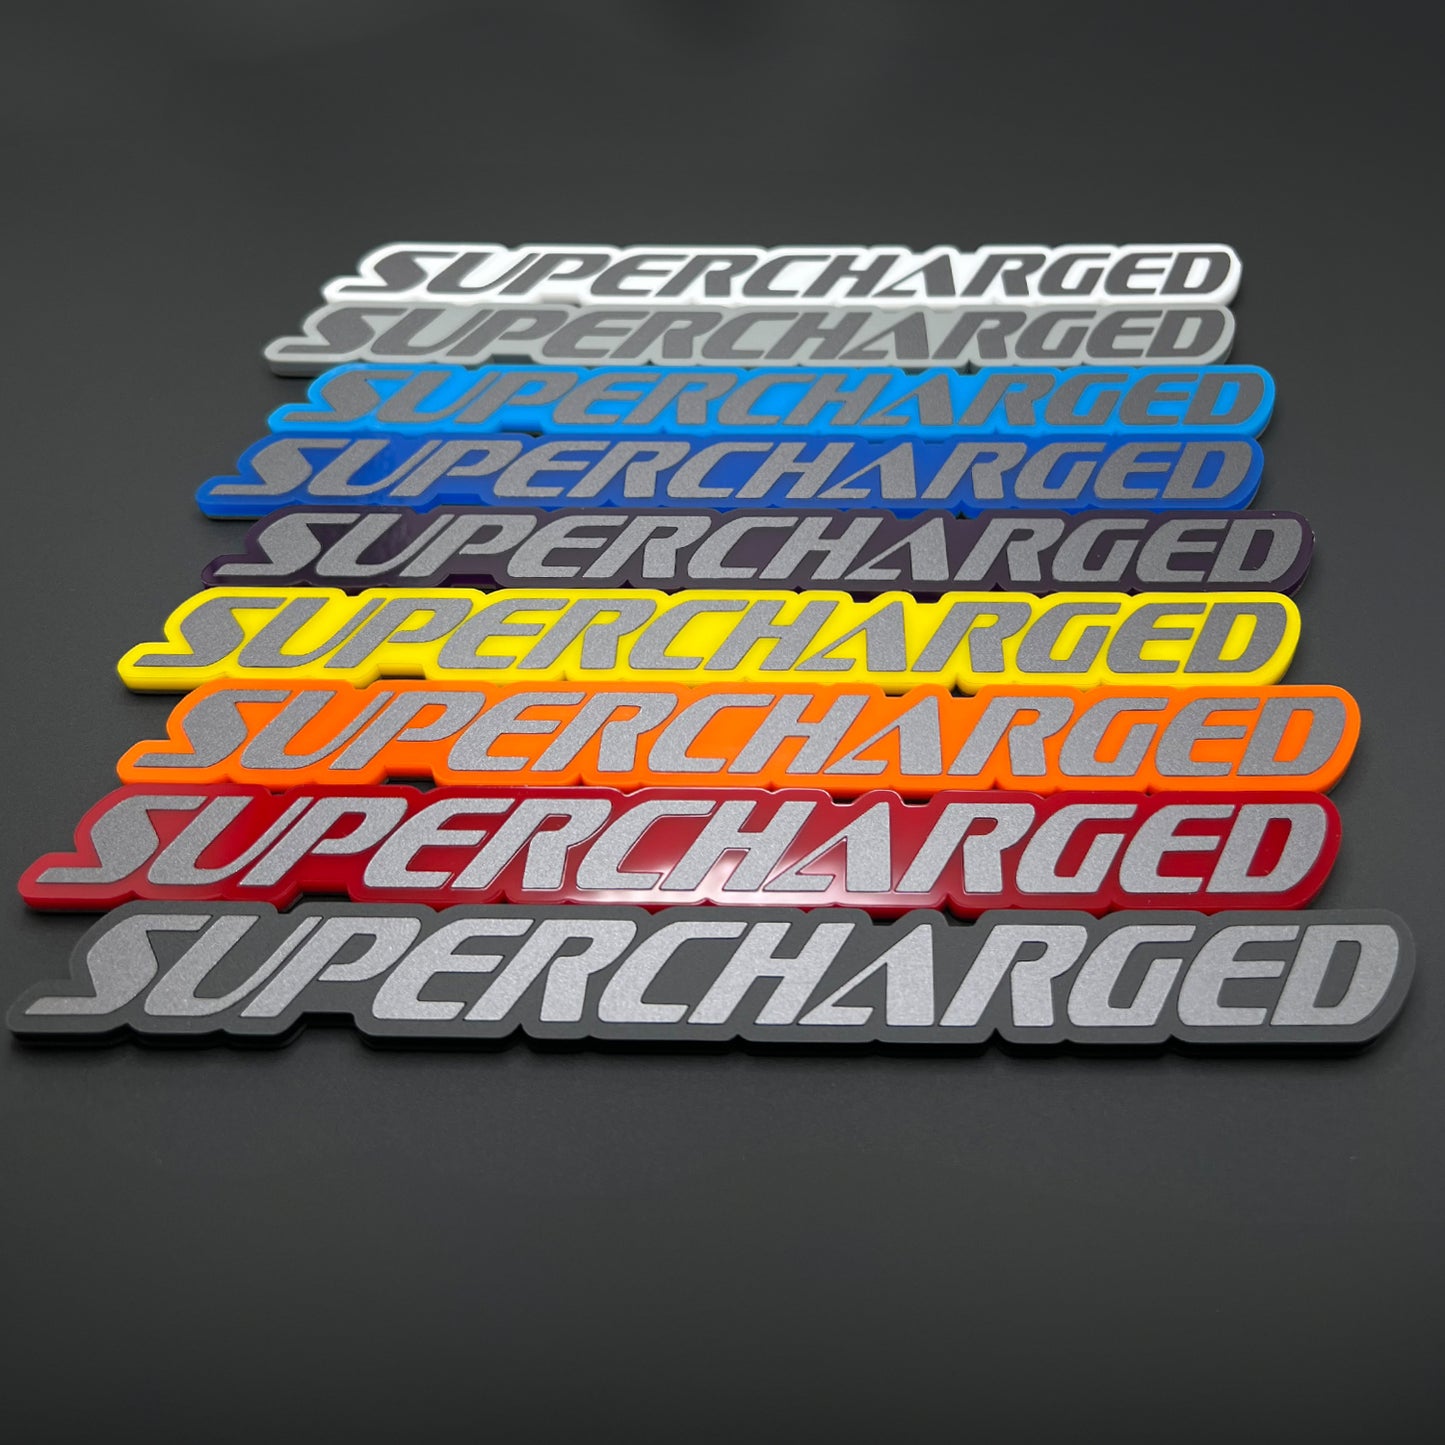 One SUPERCHARGED Emblem fits Dodge Durango Charger Challenger Trackhawk Badge